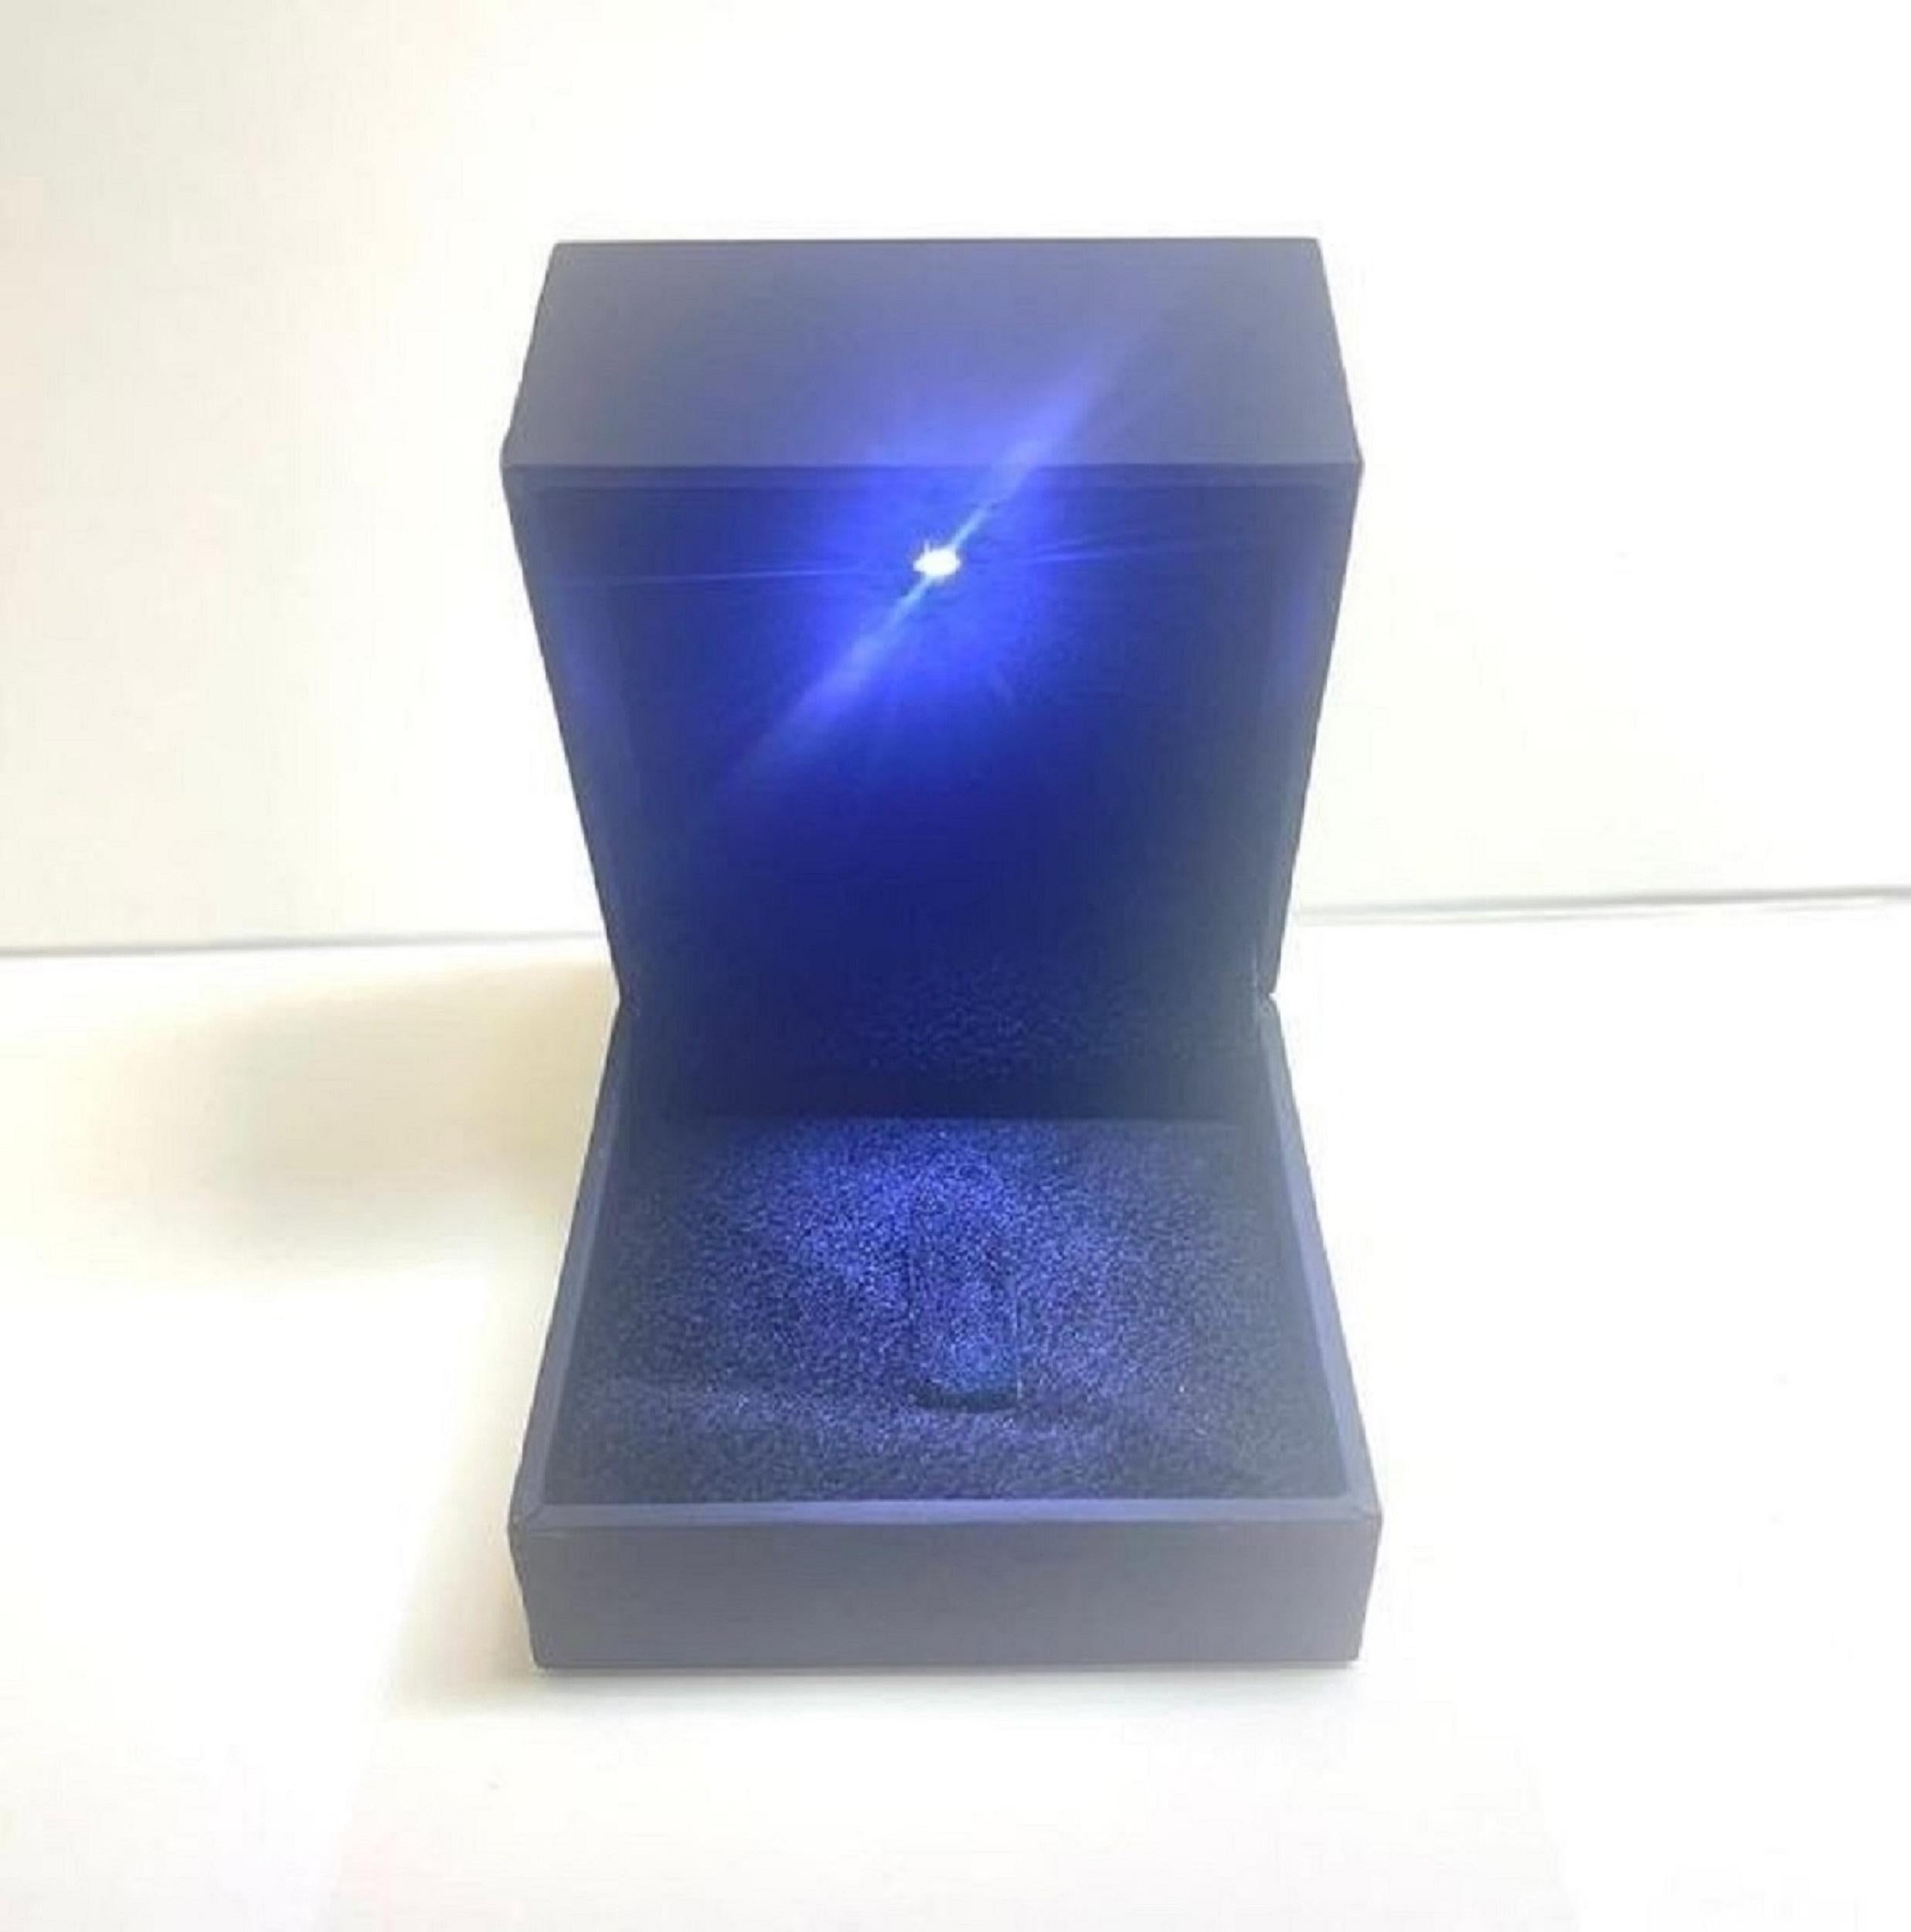 Stunning 18k White Gold Halo Ring with 0.98 Ct Natural Diamonds IGI Certificate 7